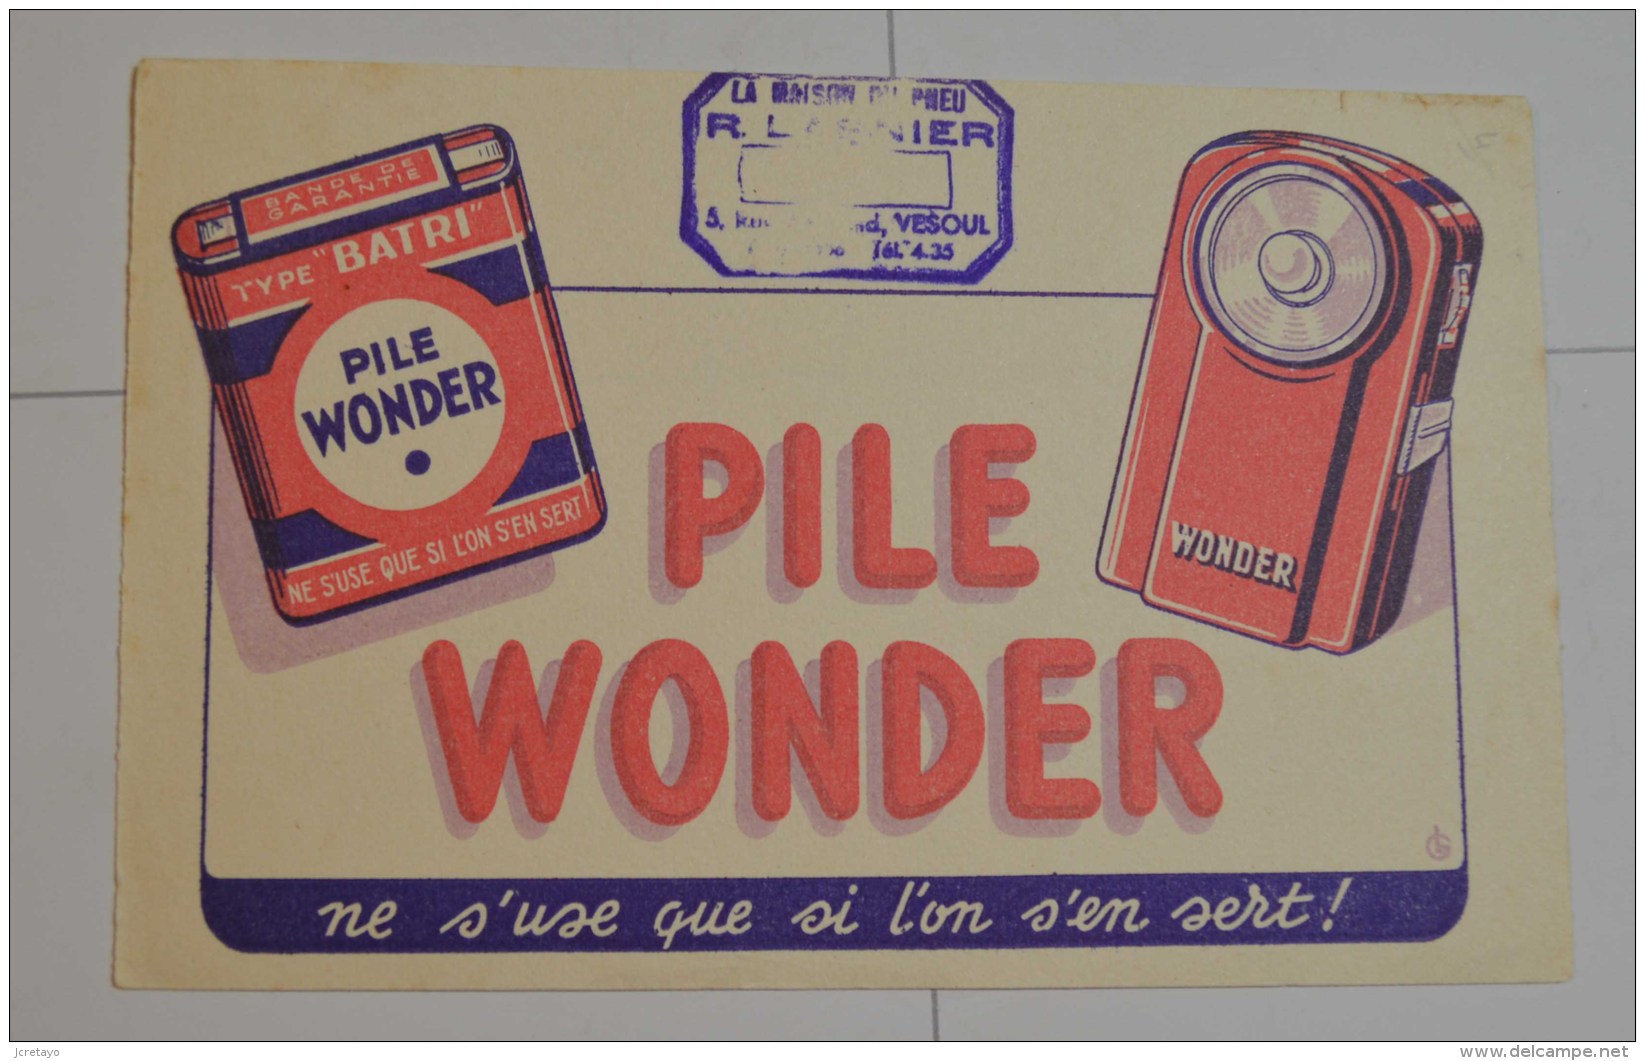 Pile Wonder - Accumulators